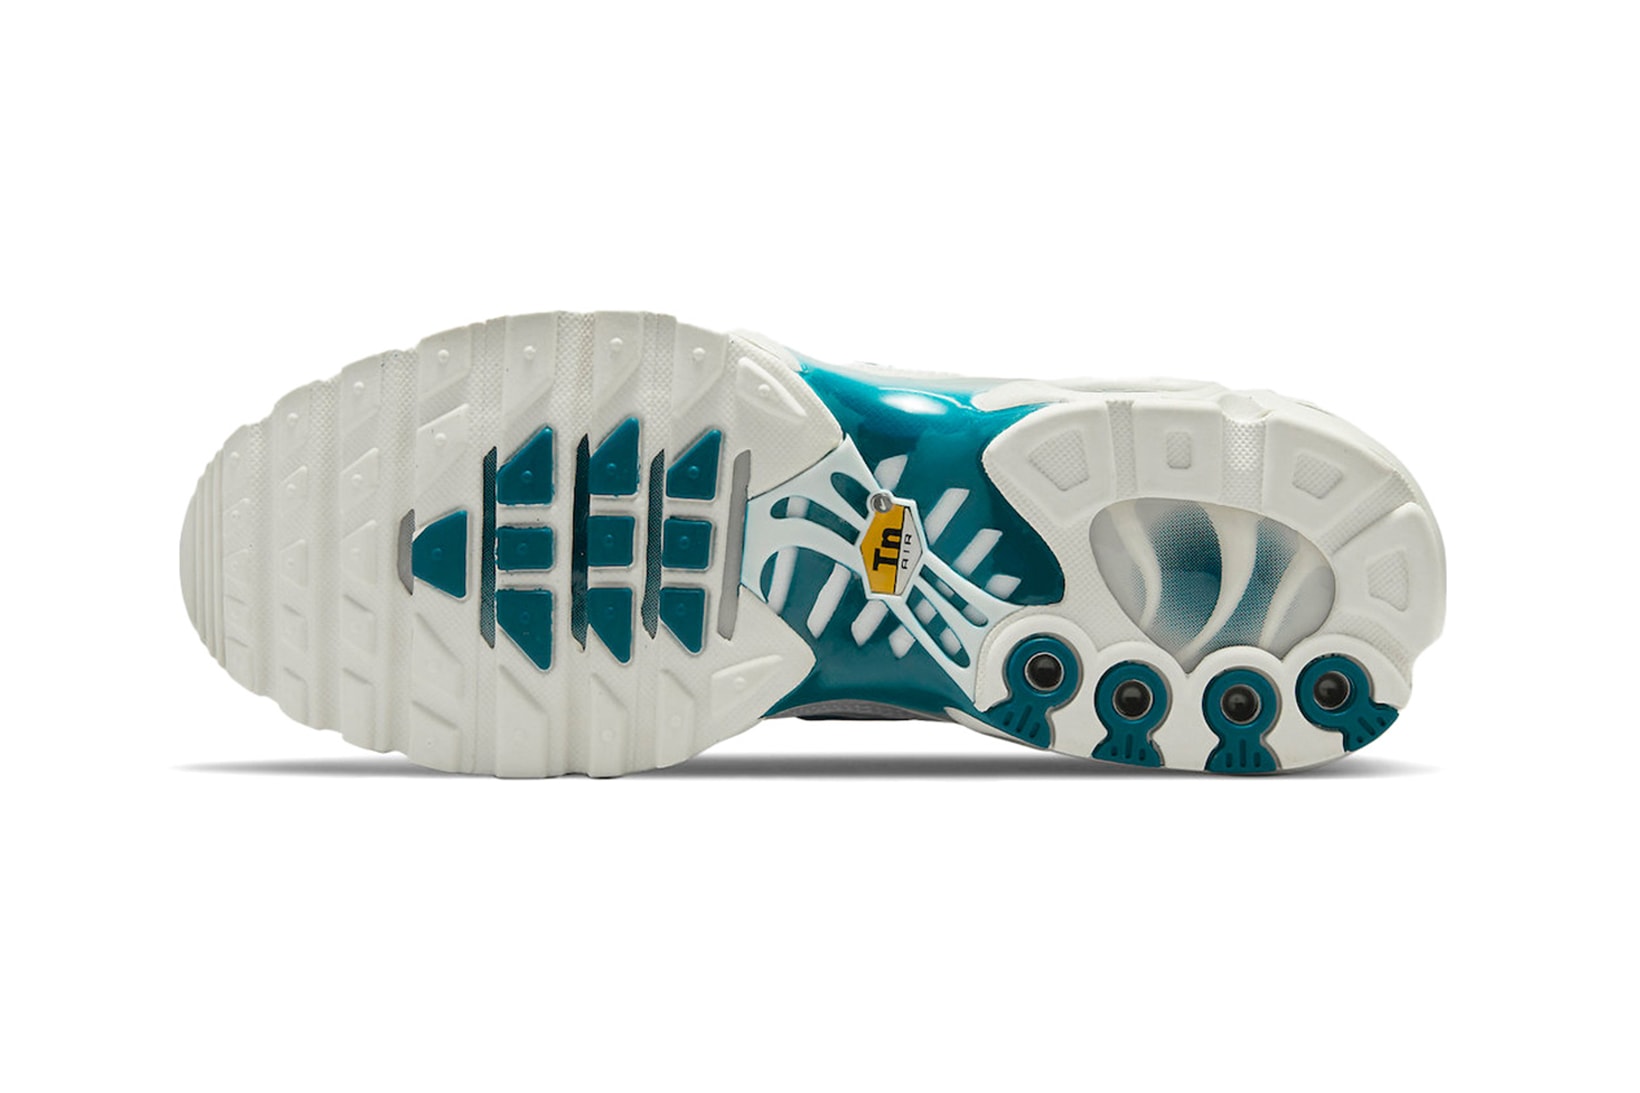 Nike Womens Air Max Plus Metallic Teal Sneakers Footwear Kicks Shoes White Blue Soles